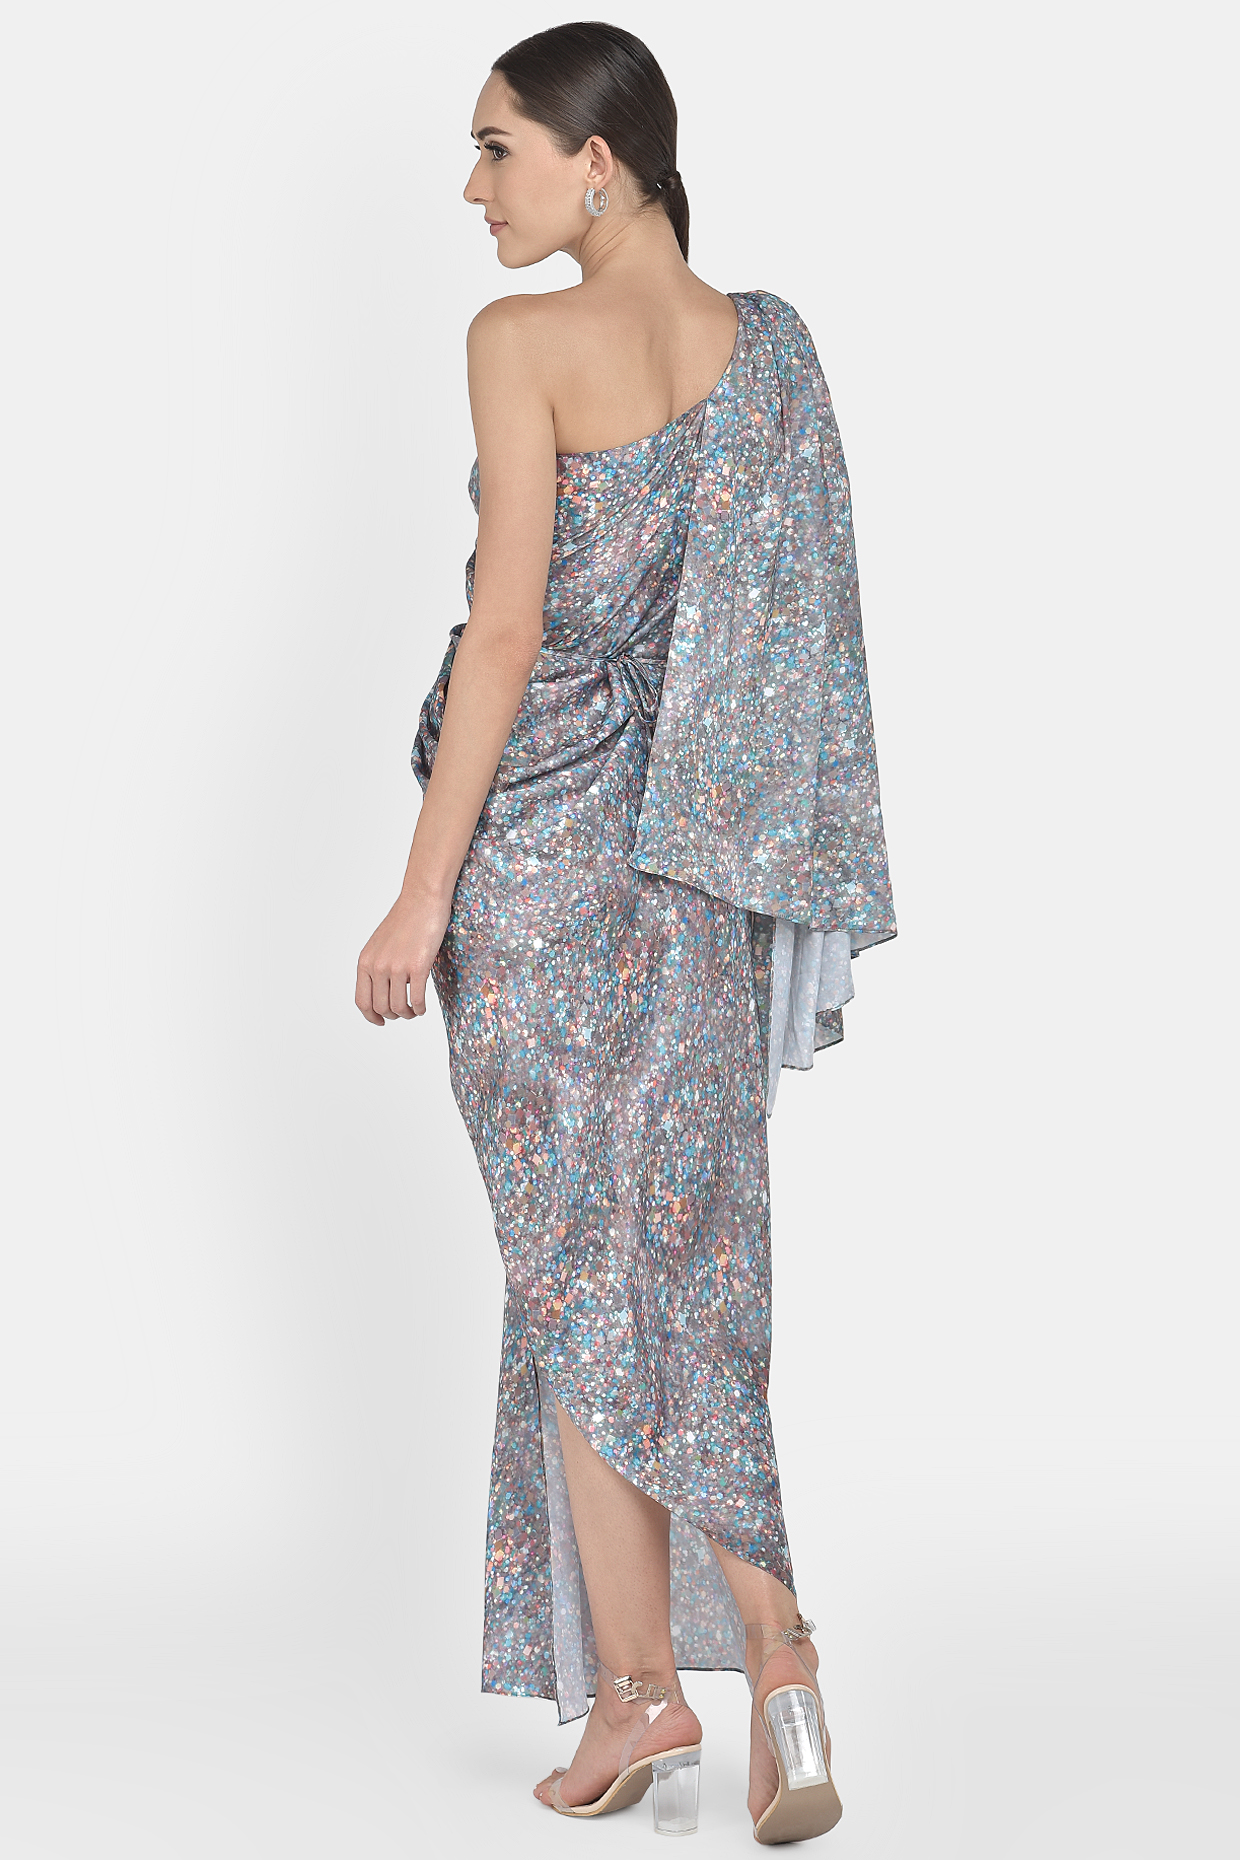 Grey Digital Print Drape Gown